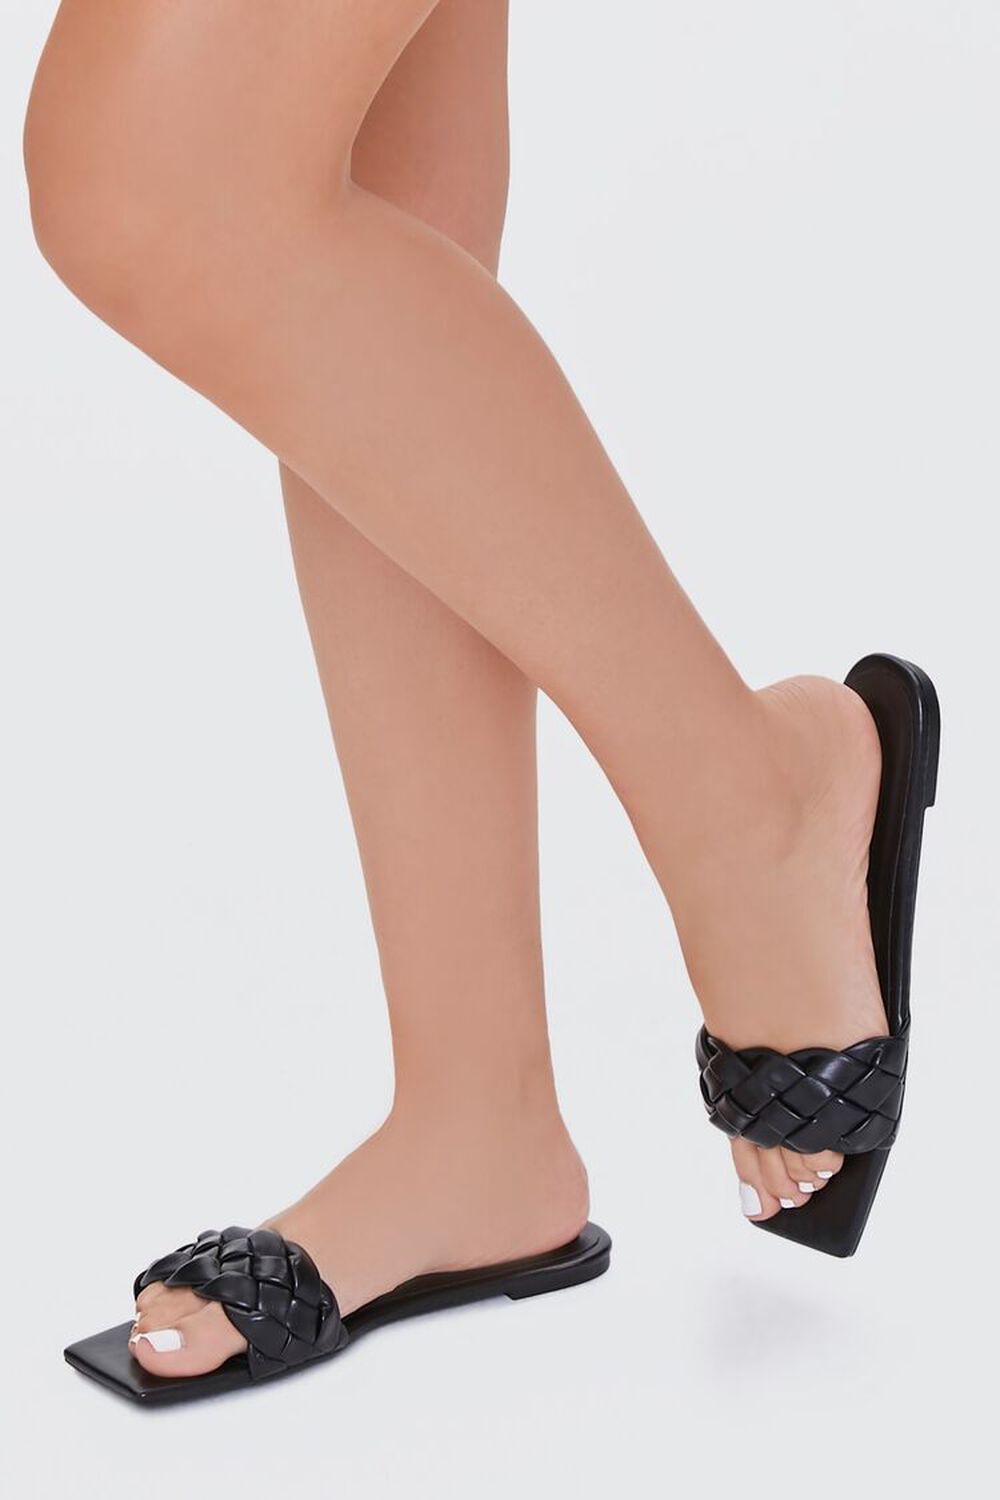 BLACK Braided Square-Toe Sandals, image 1